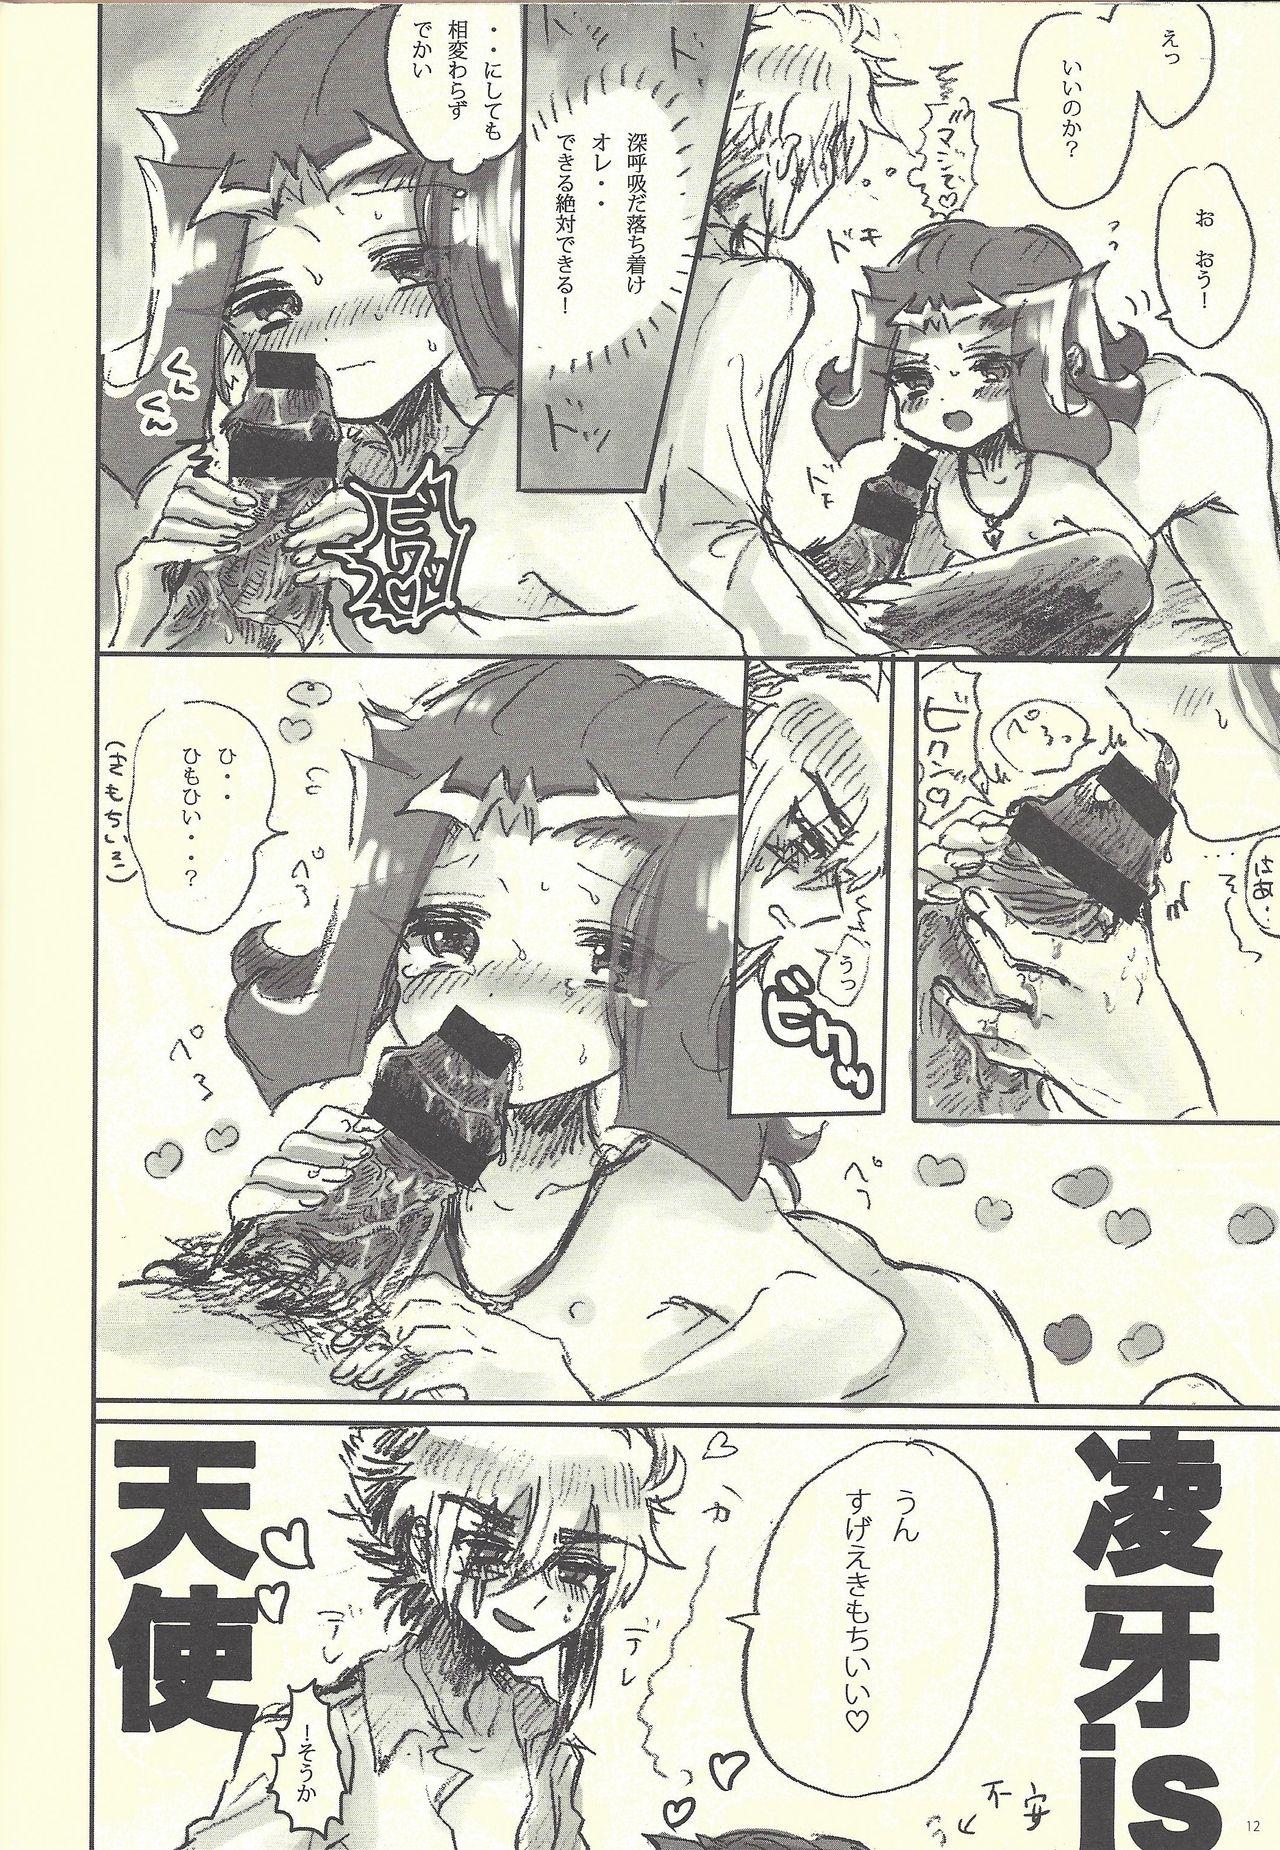 Spoon Ore to Ryoga no sore kara - Yu-gi-oh zexal Body - Page 10